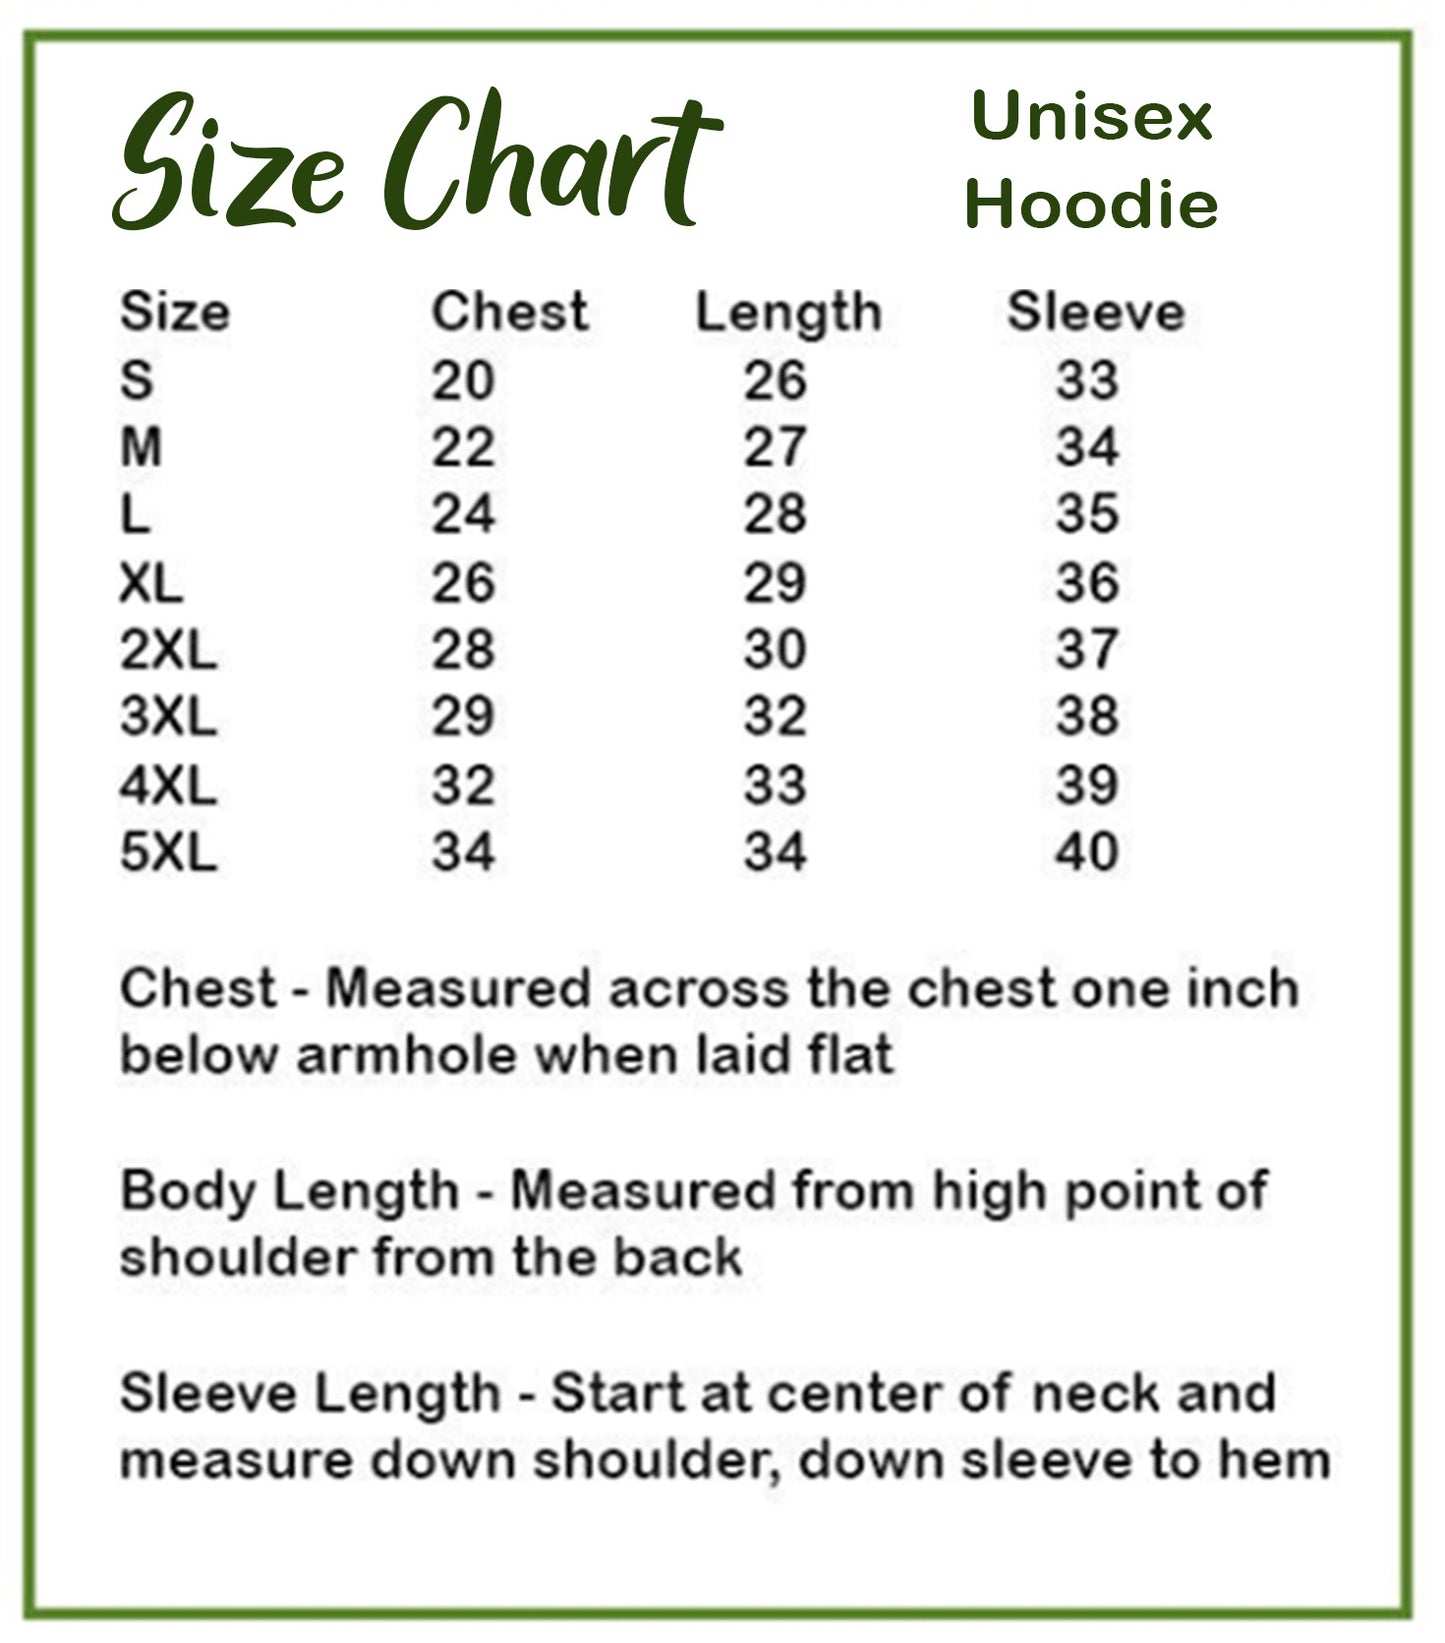 Cougar Moon - T-shirts, Hoodies and Sweatshirts